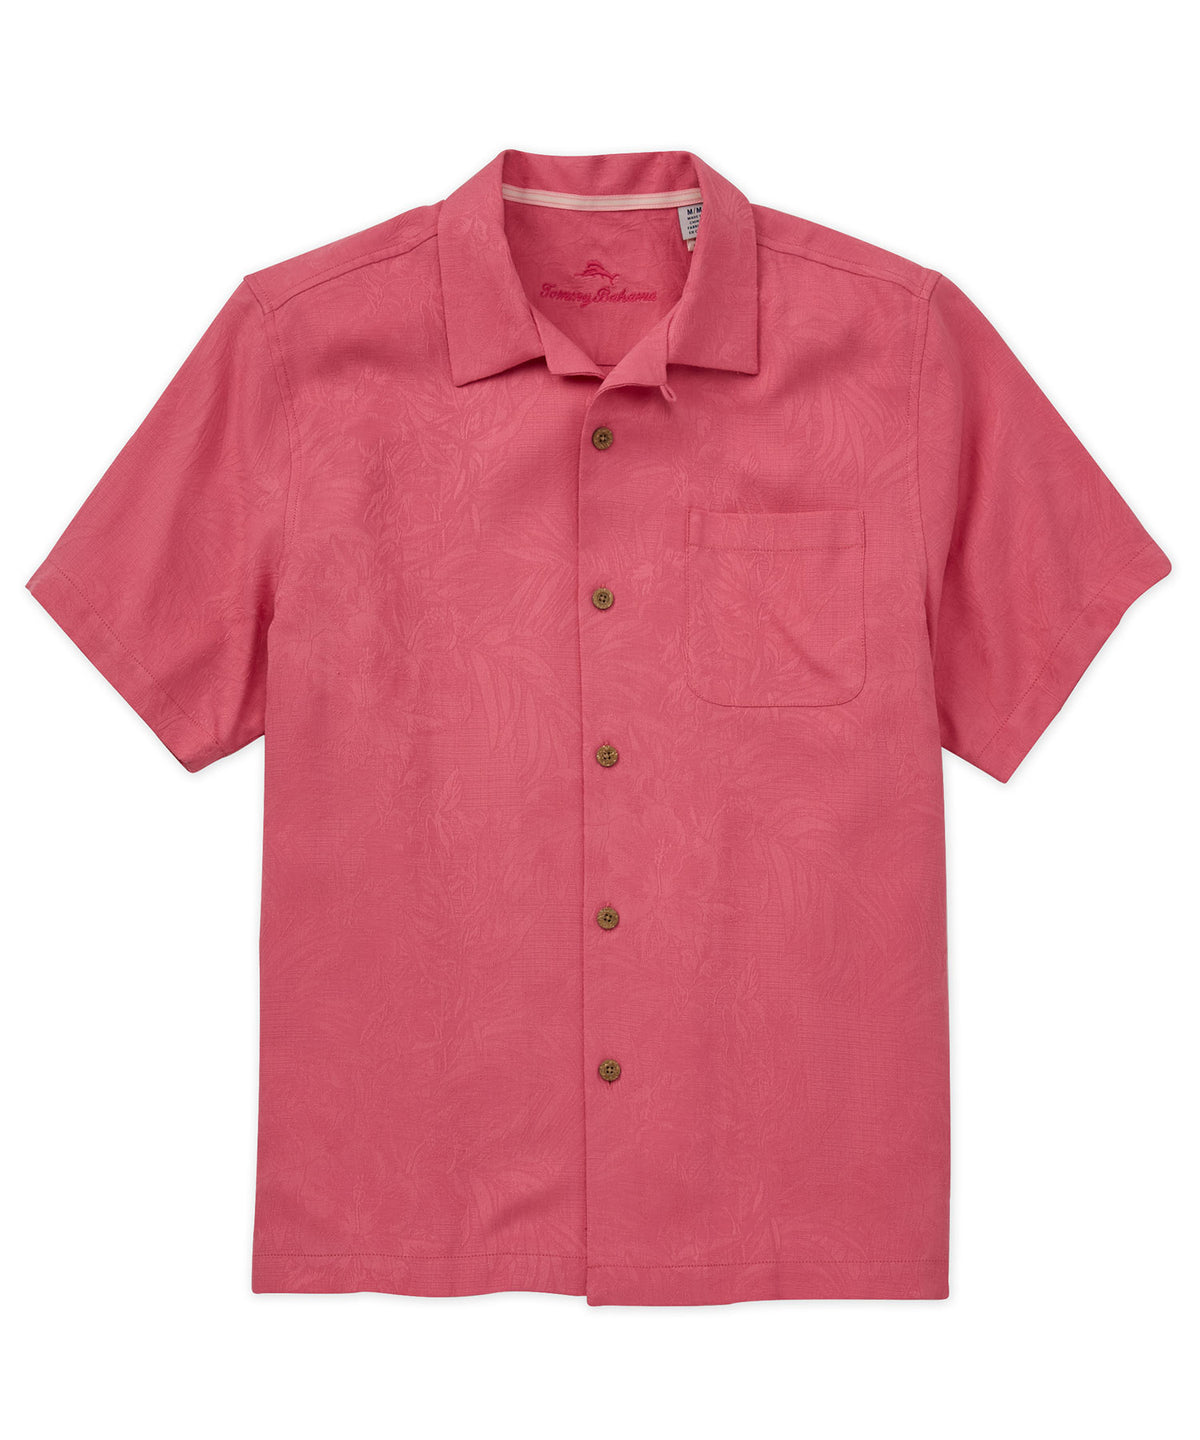 Tommy Bahama Short Sleeve Topic Isles Camp Shirt, Big & Tall